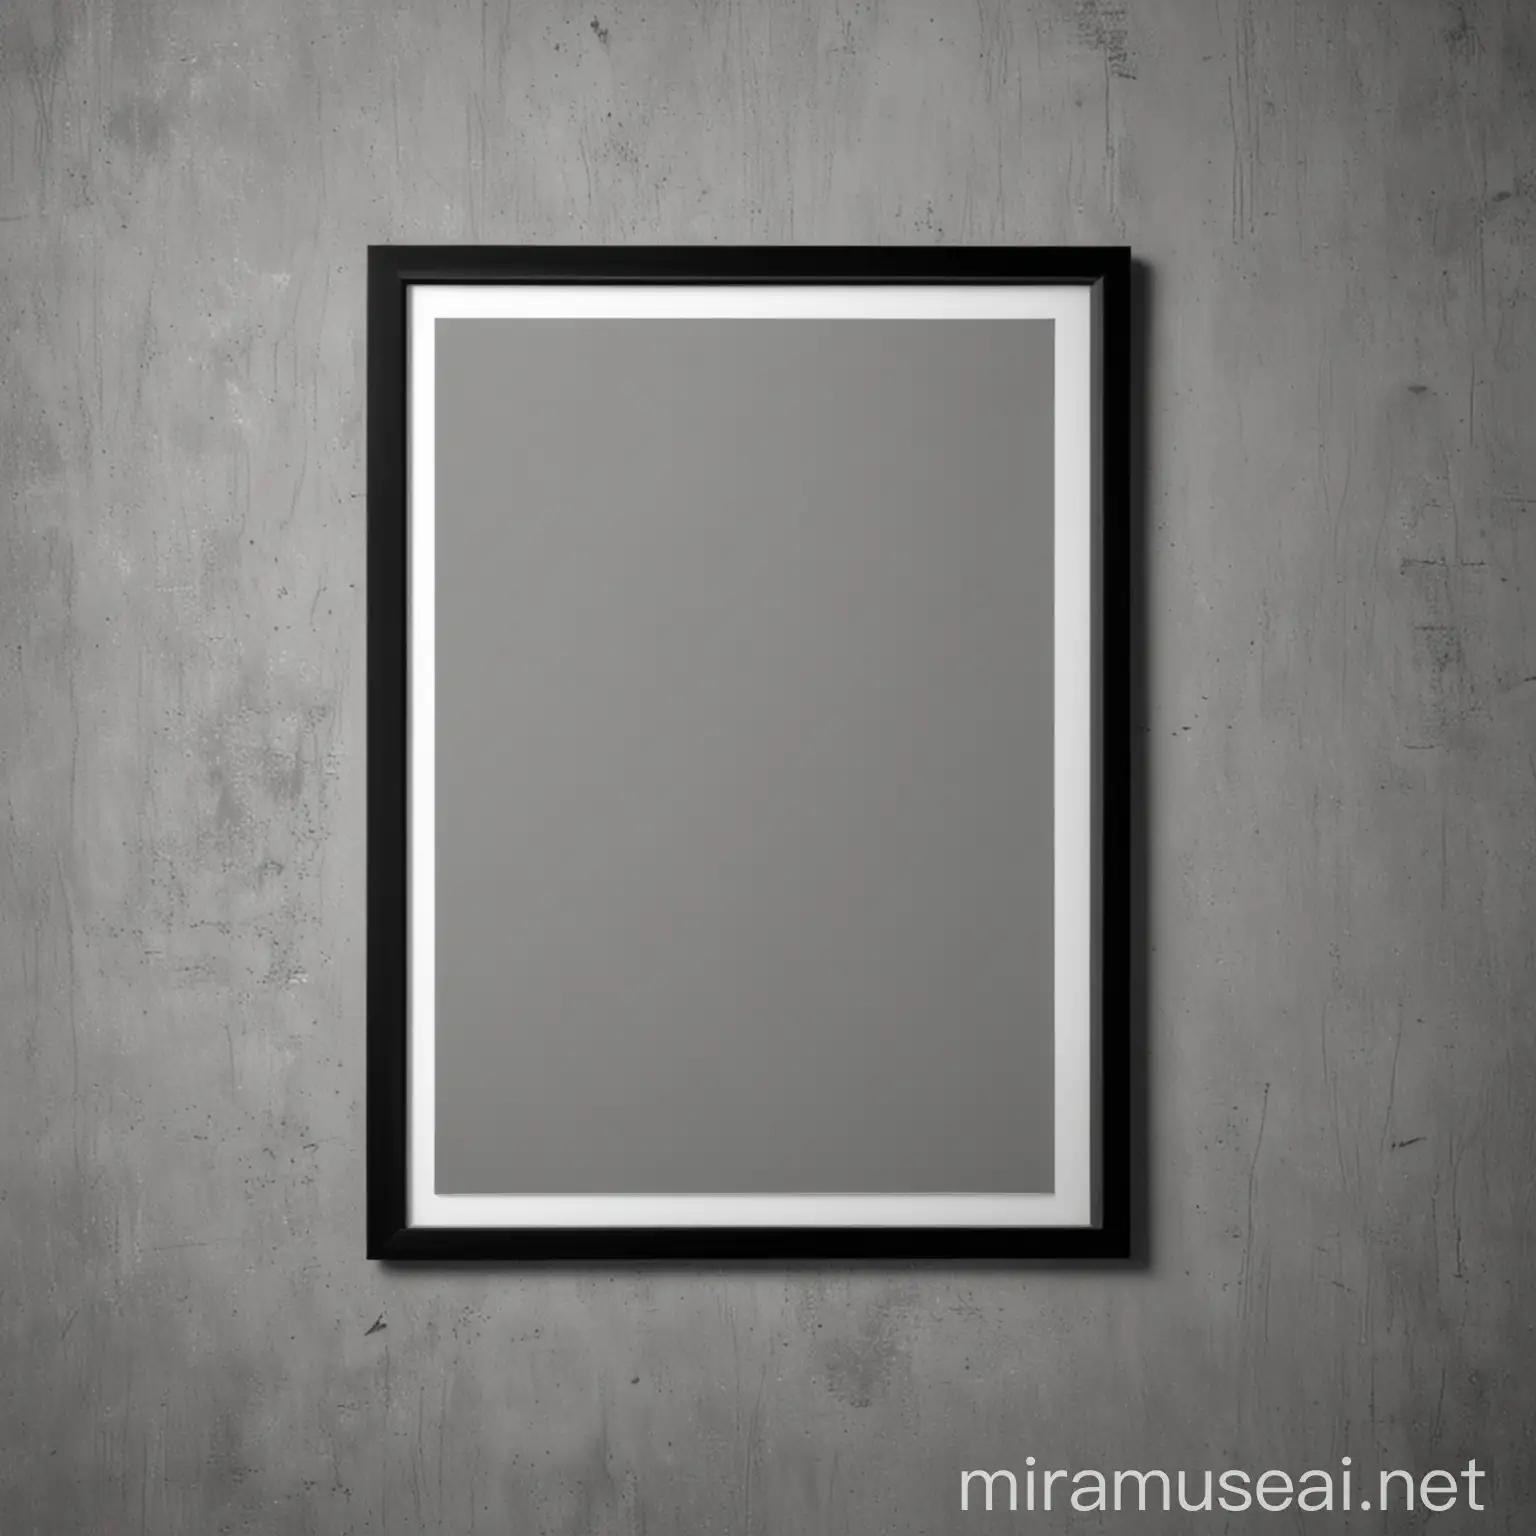 Minimalistic A4 Black Frame Mockup on Gray Wall